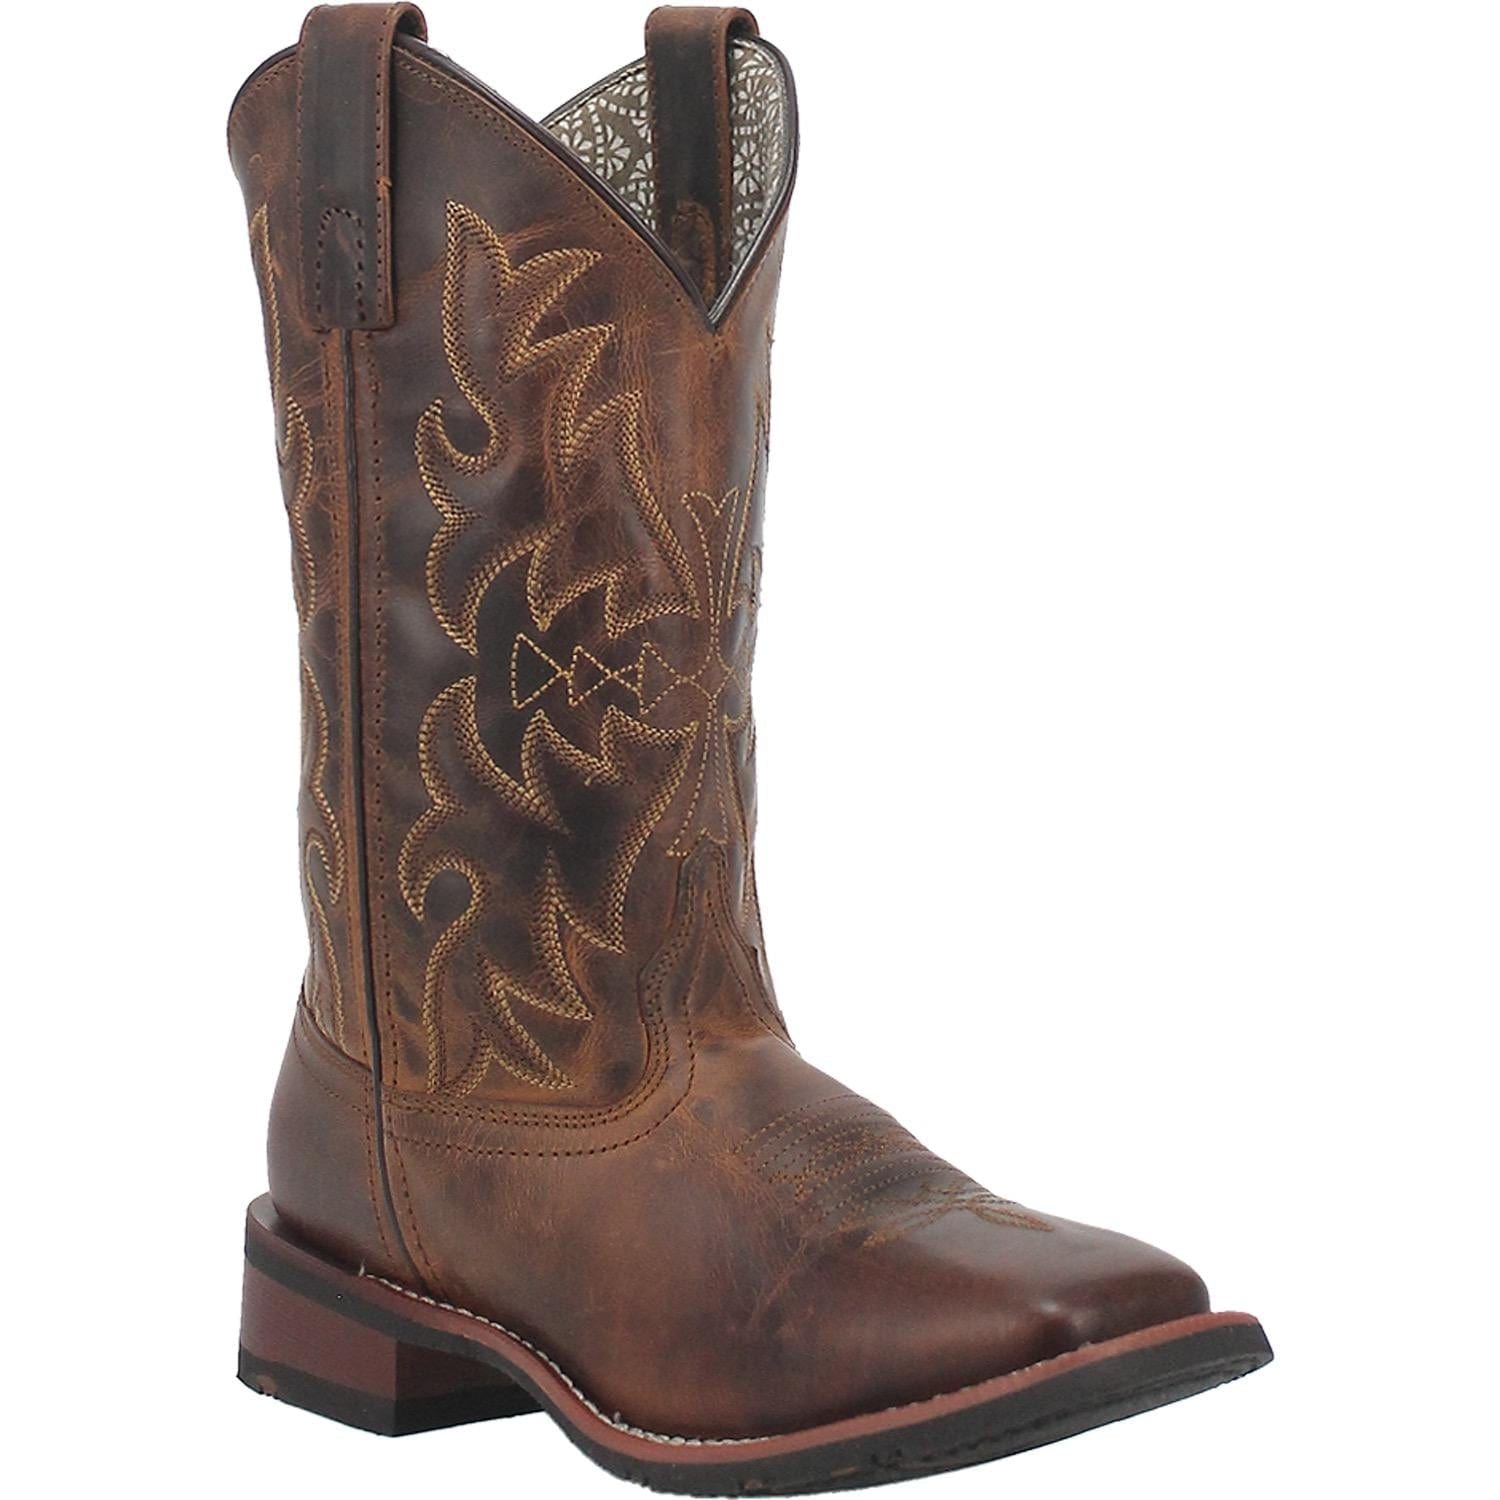 LAREDO Boots Laredo Women's Anita Tan Leather Cowgirl Boots 5602